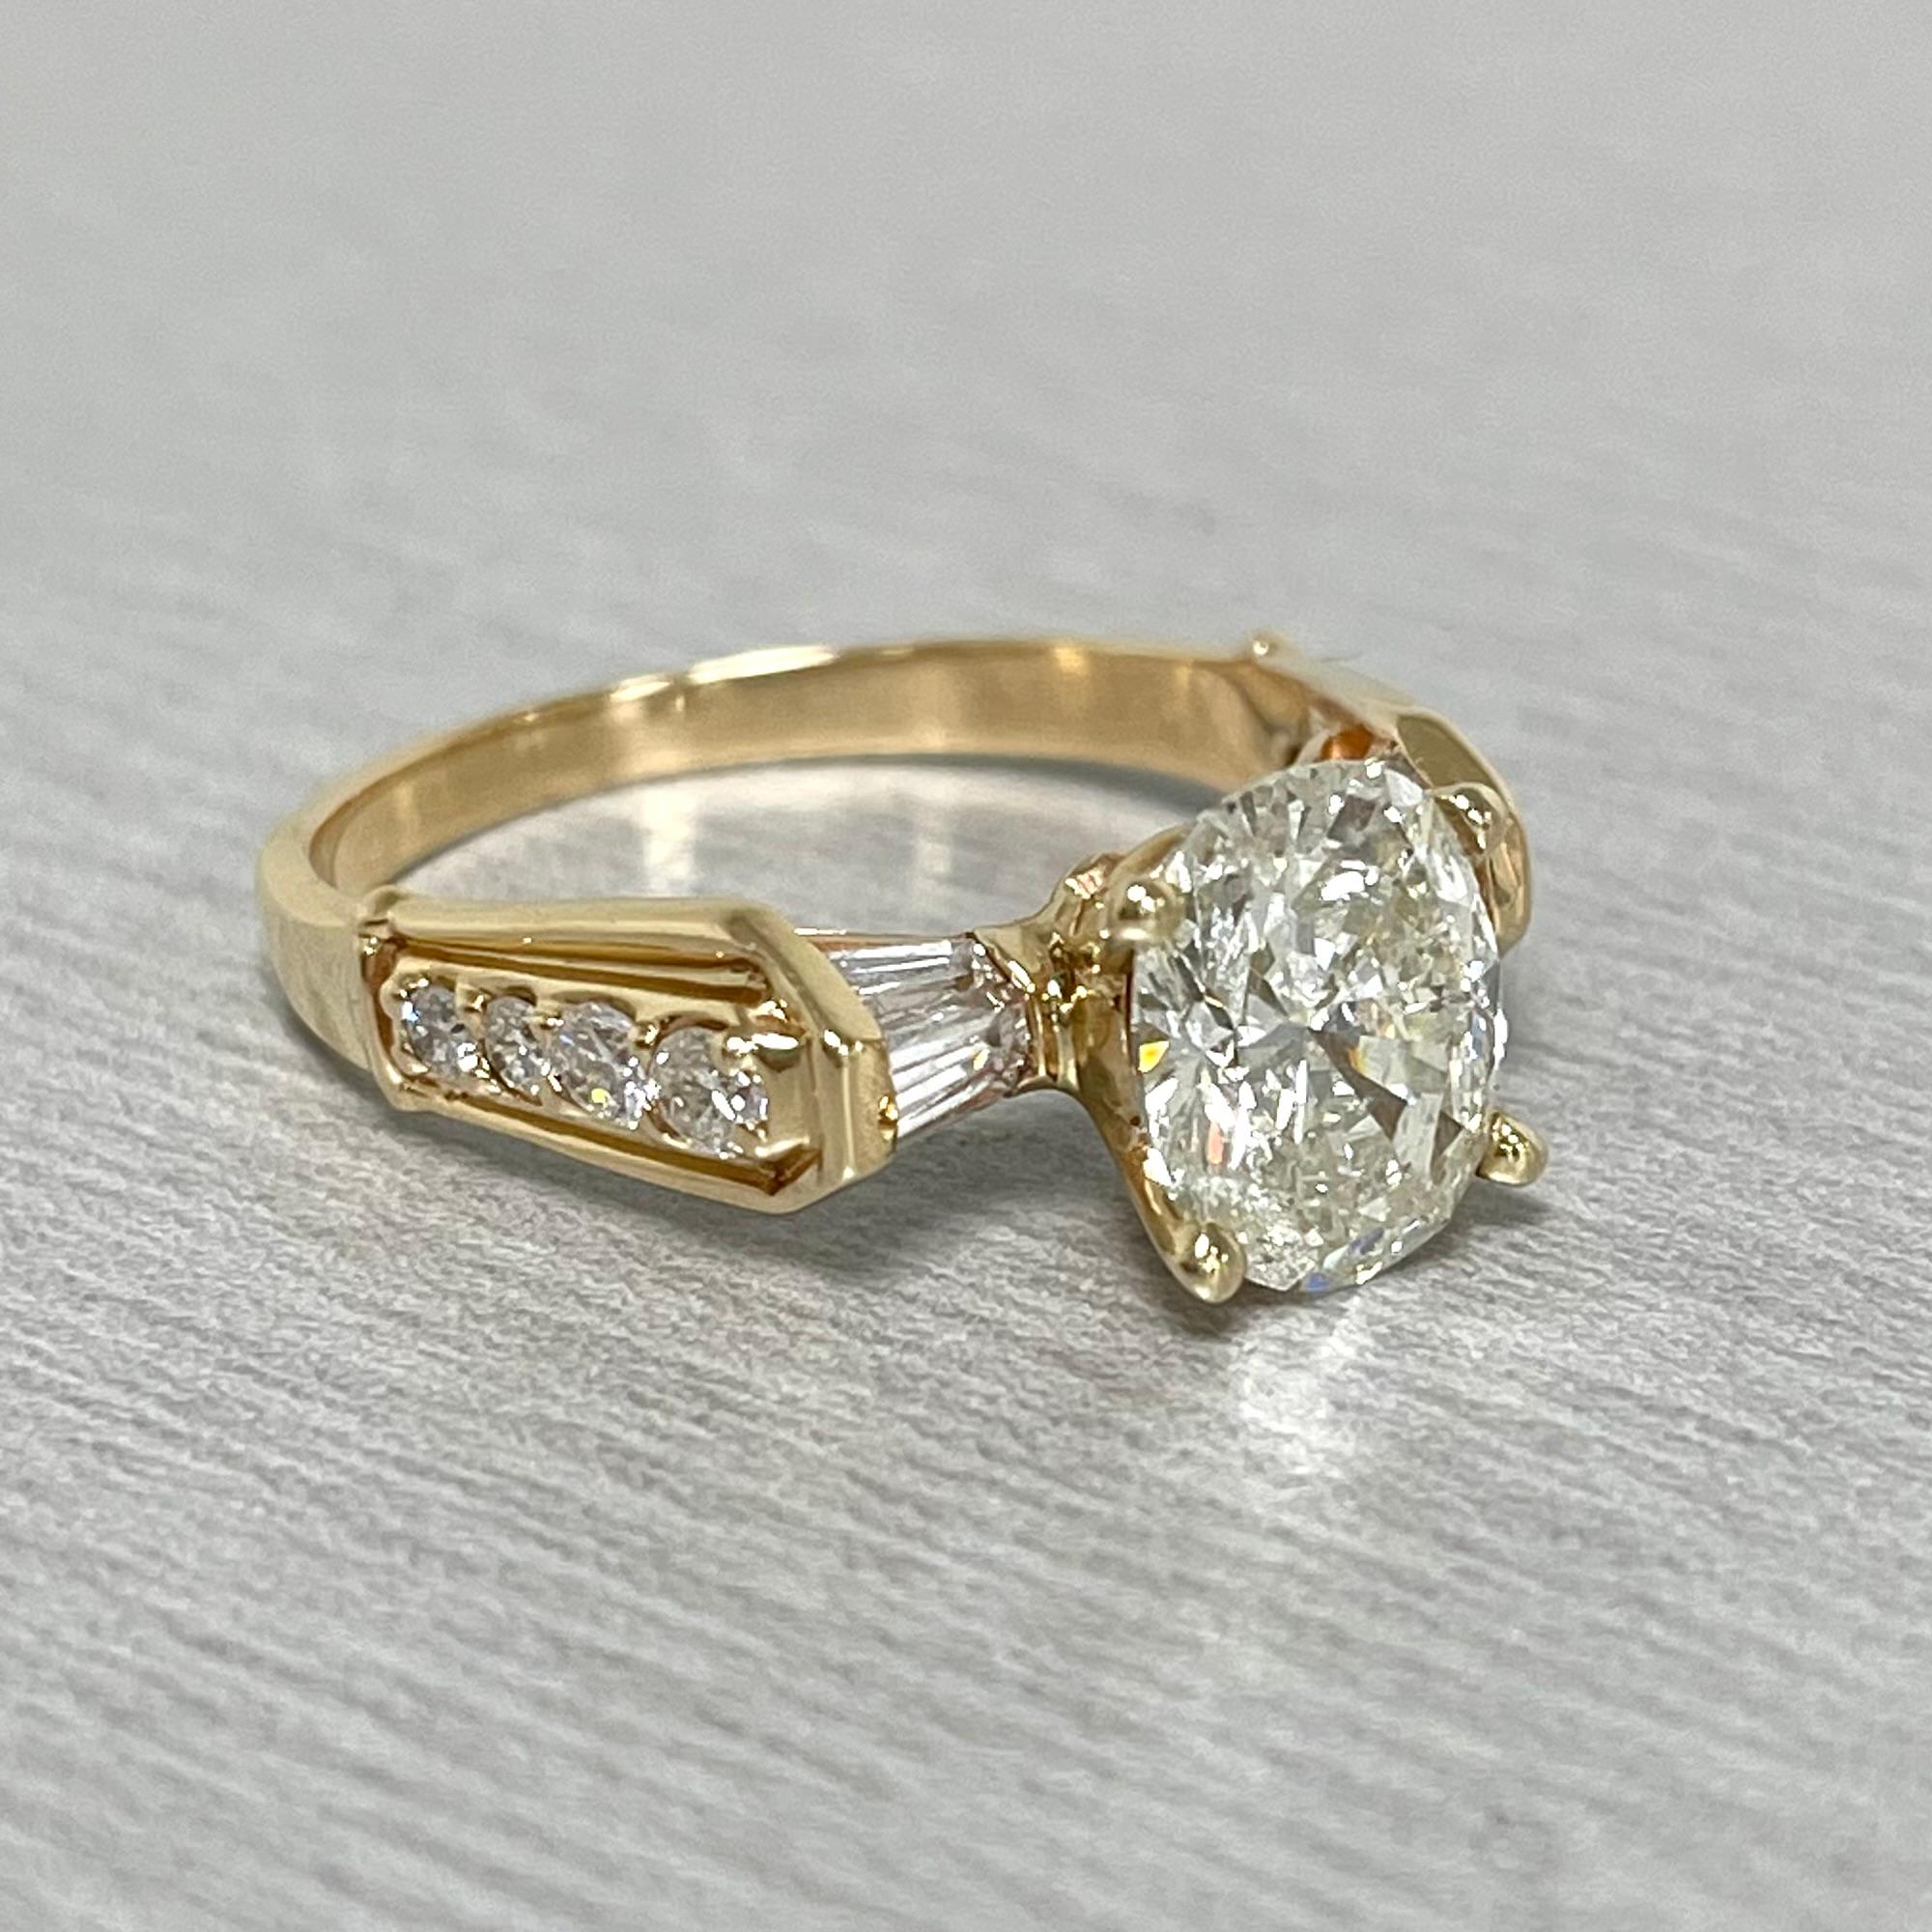 2 carat oval diamond ring yellow gold